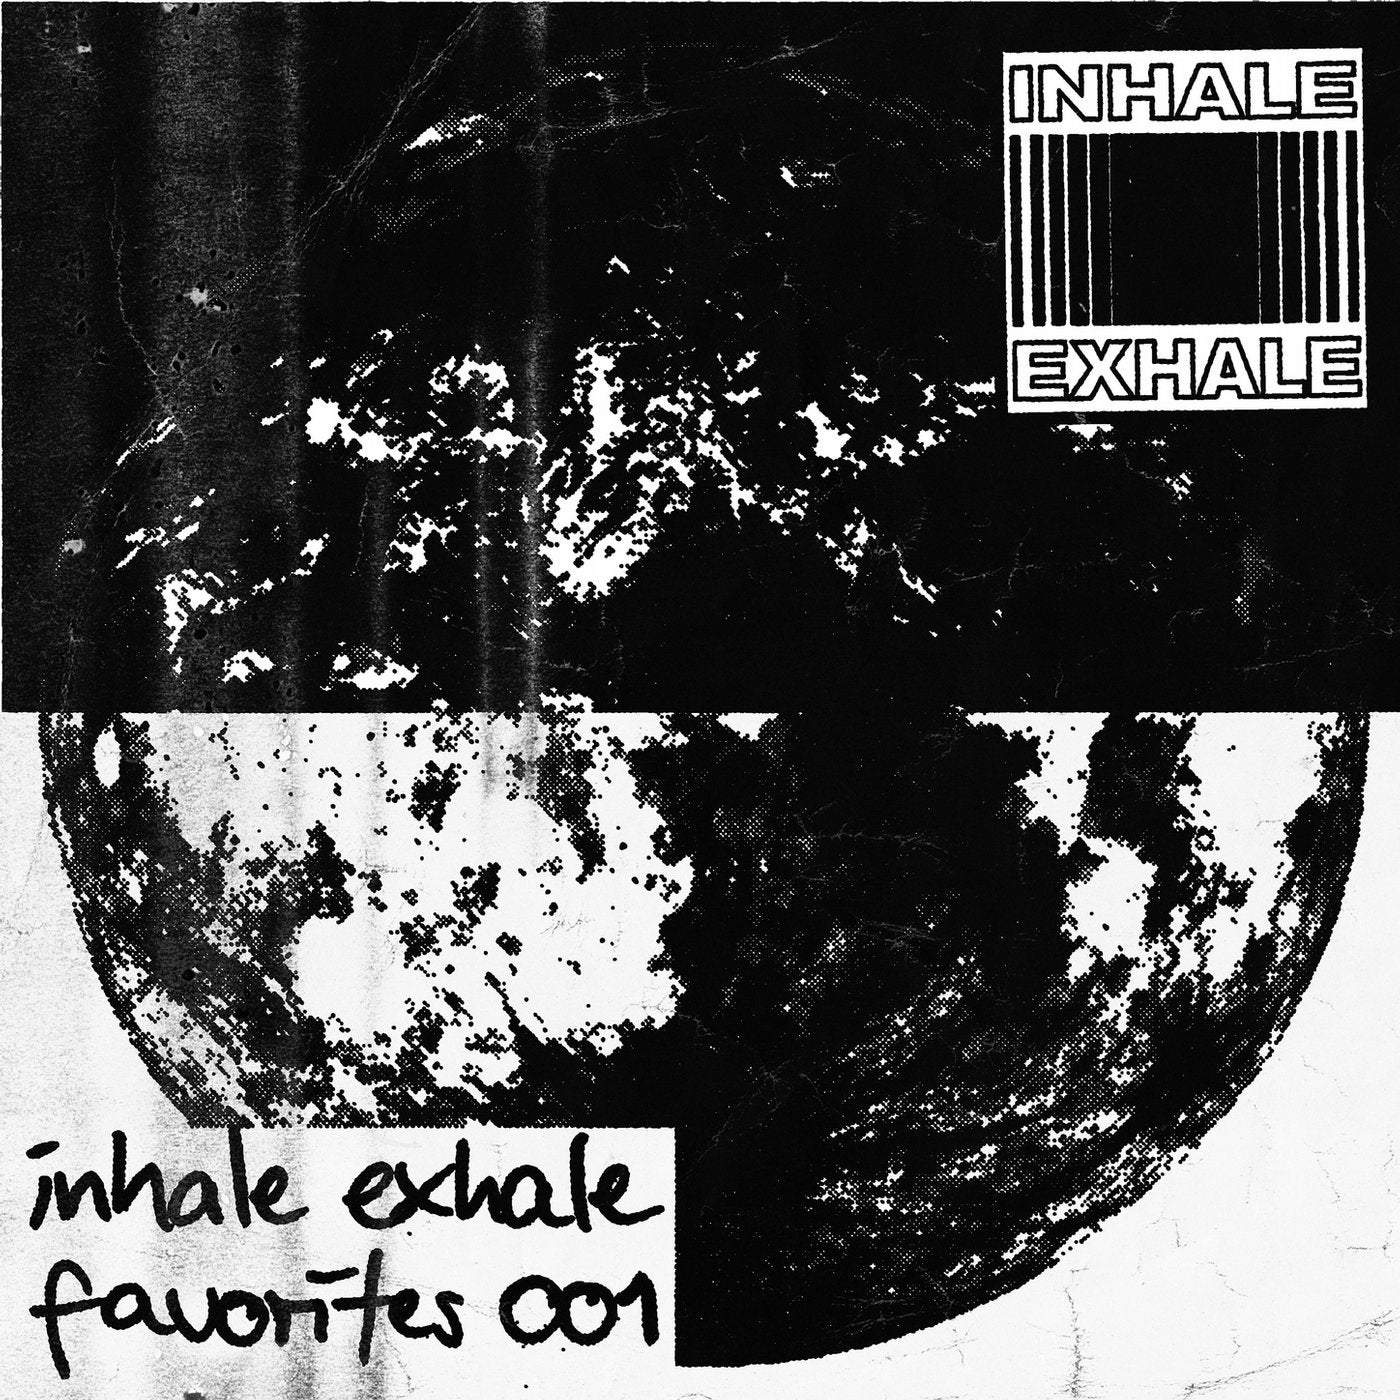 image cover: VA - Inhale Exhale Favorites001 / INEXFAV001